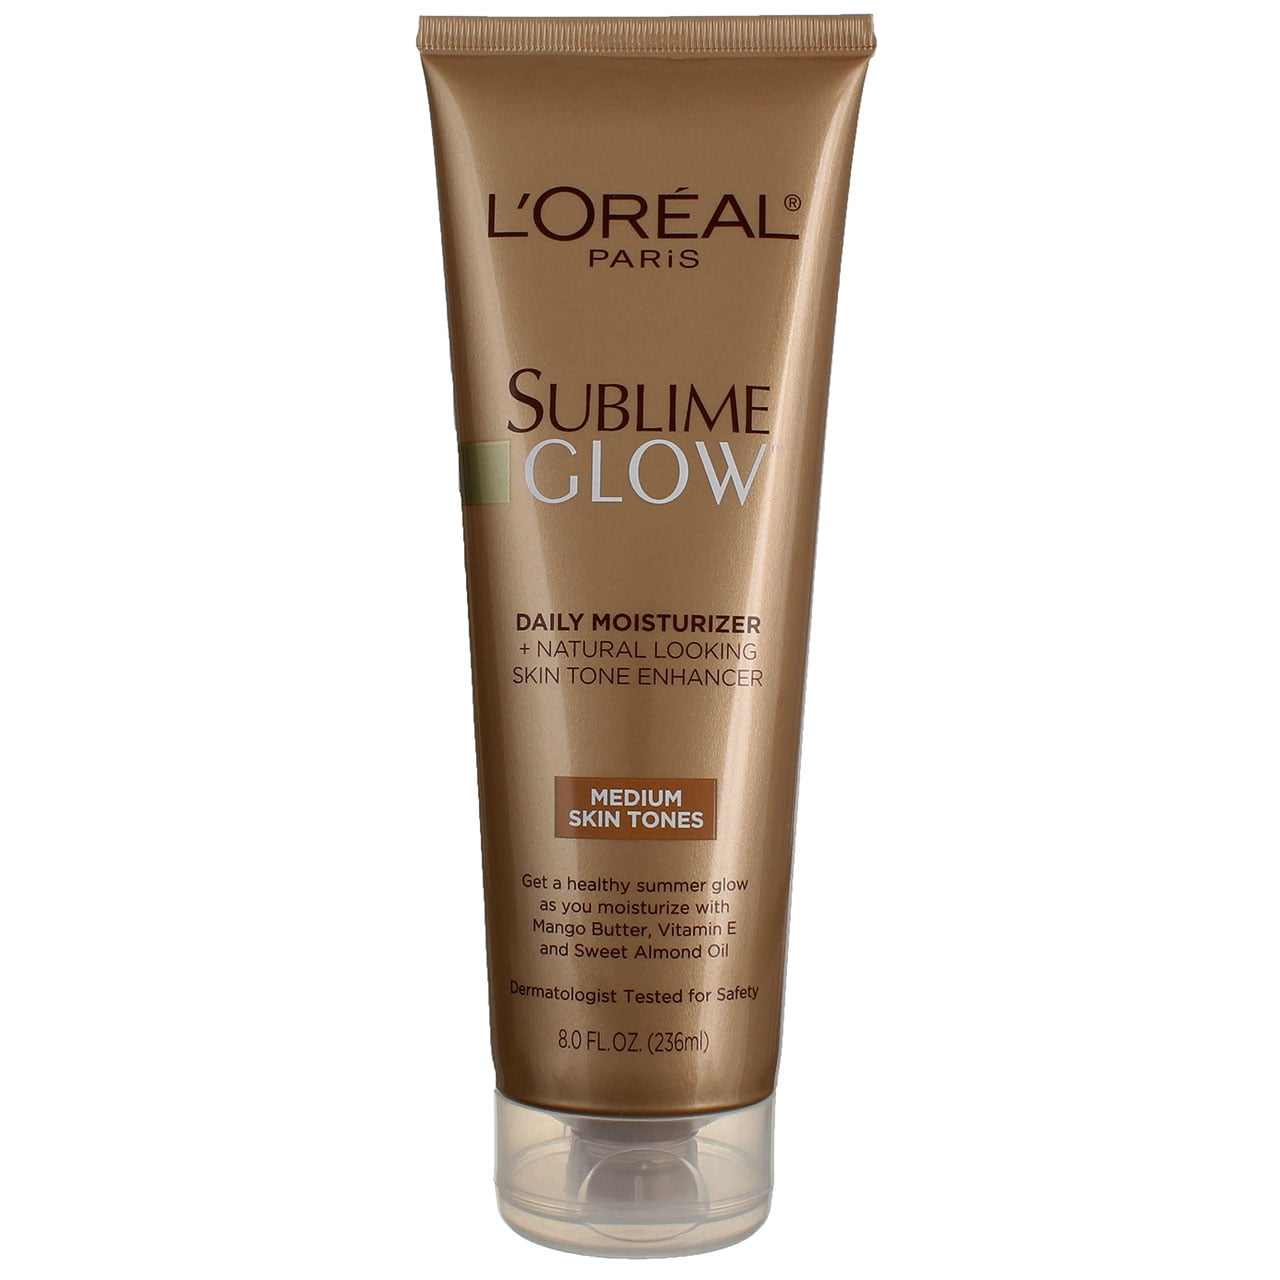 L'Oreal Paris Sunless Tanning Lotion, Sublime Glow Daily Moisturizer and Natural Skin Tone Enhancer, Medium, 8 fl oz